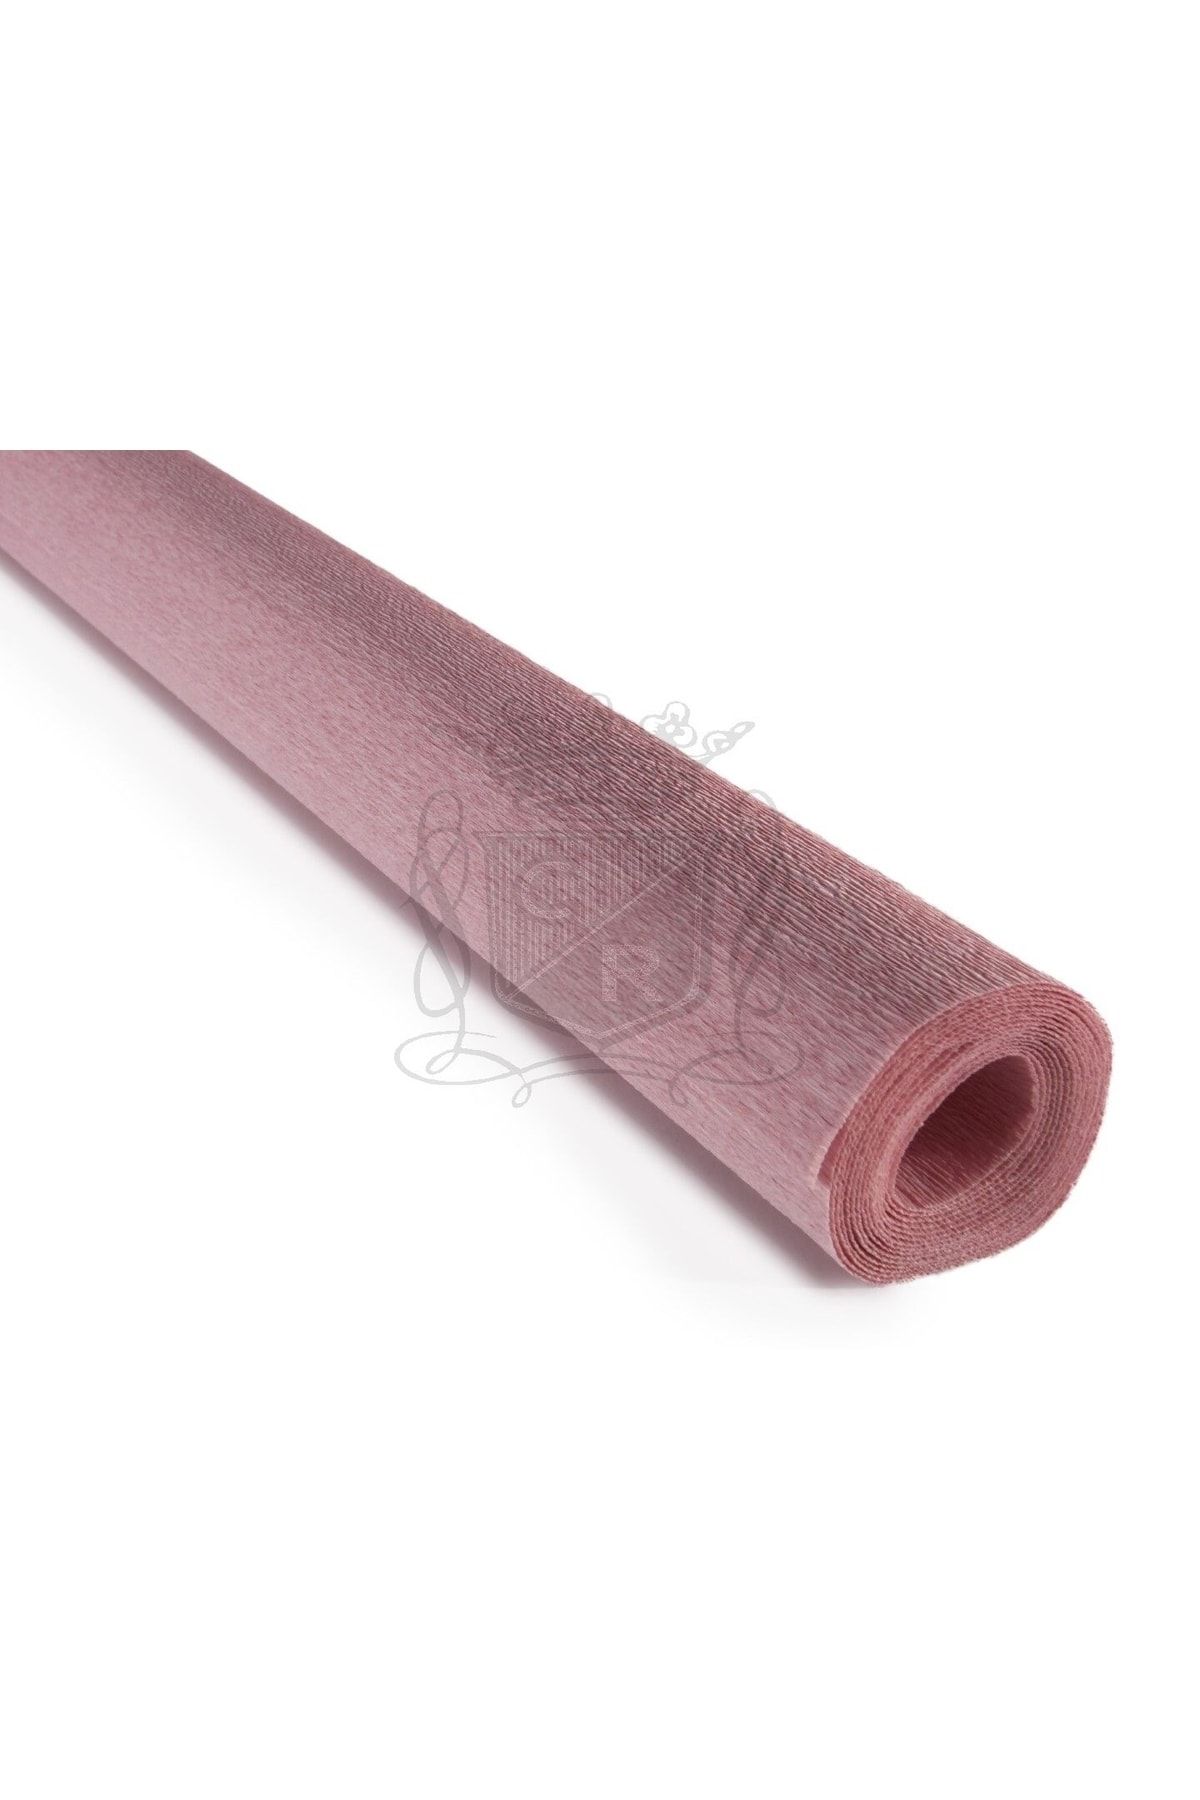 roco paper Italyan Krapon Kağıdı No:360 - Soft Gül Pembe - Soft Rose Pink 90 Gr. 50x150 Cm